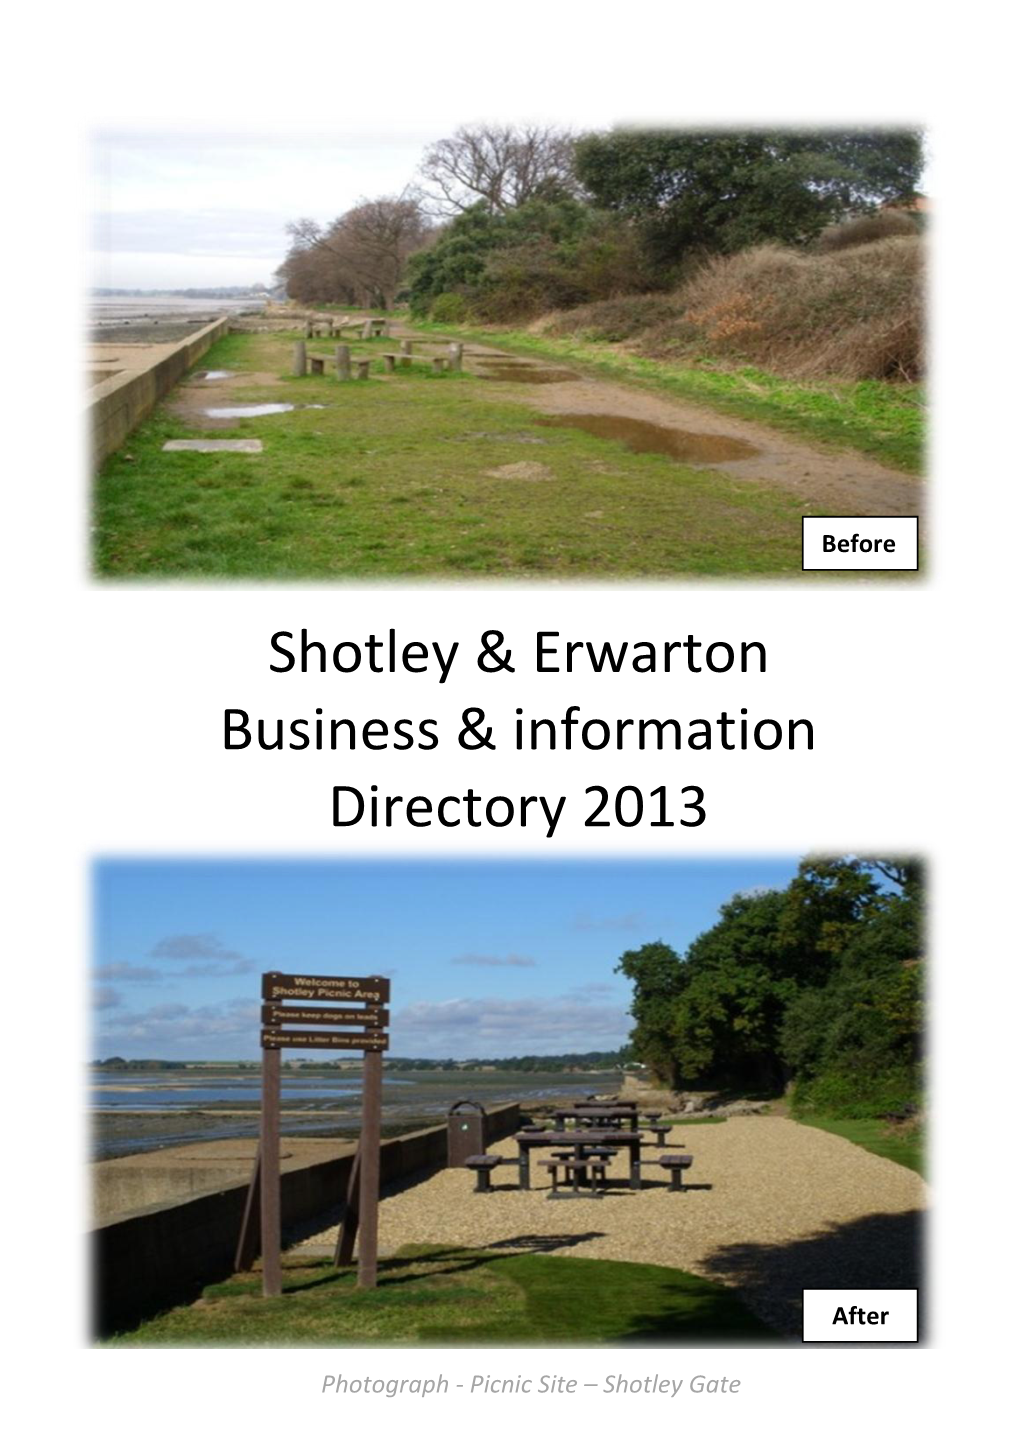 Shotley & Erwarton Business & Information Directory 2013